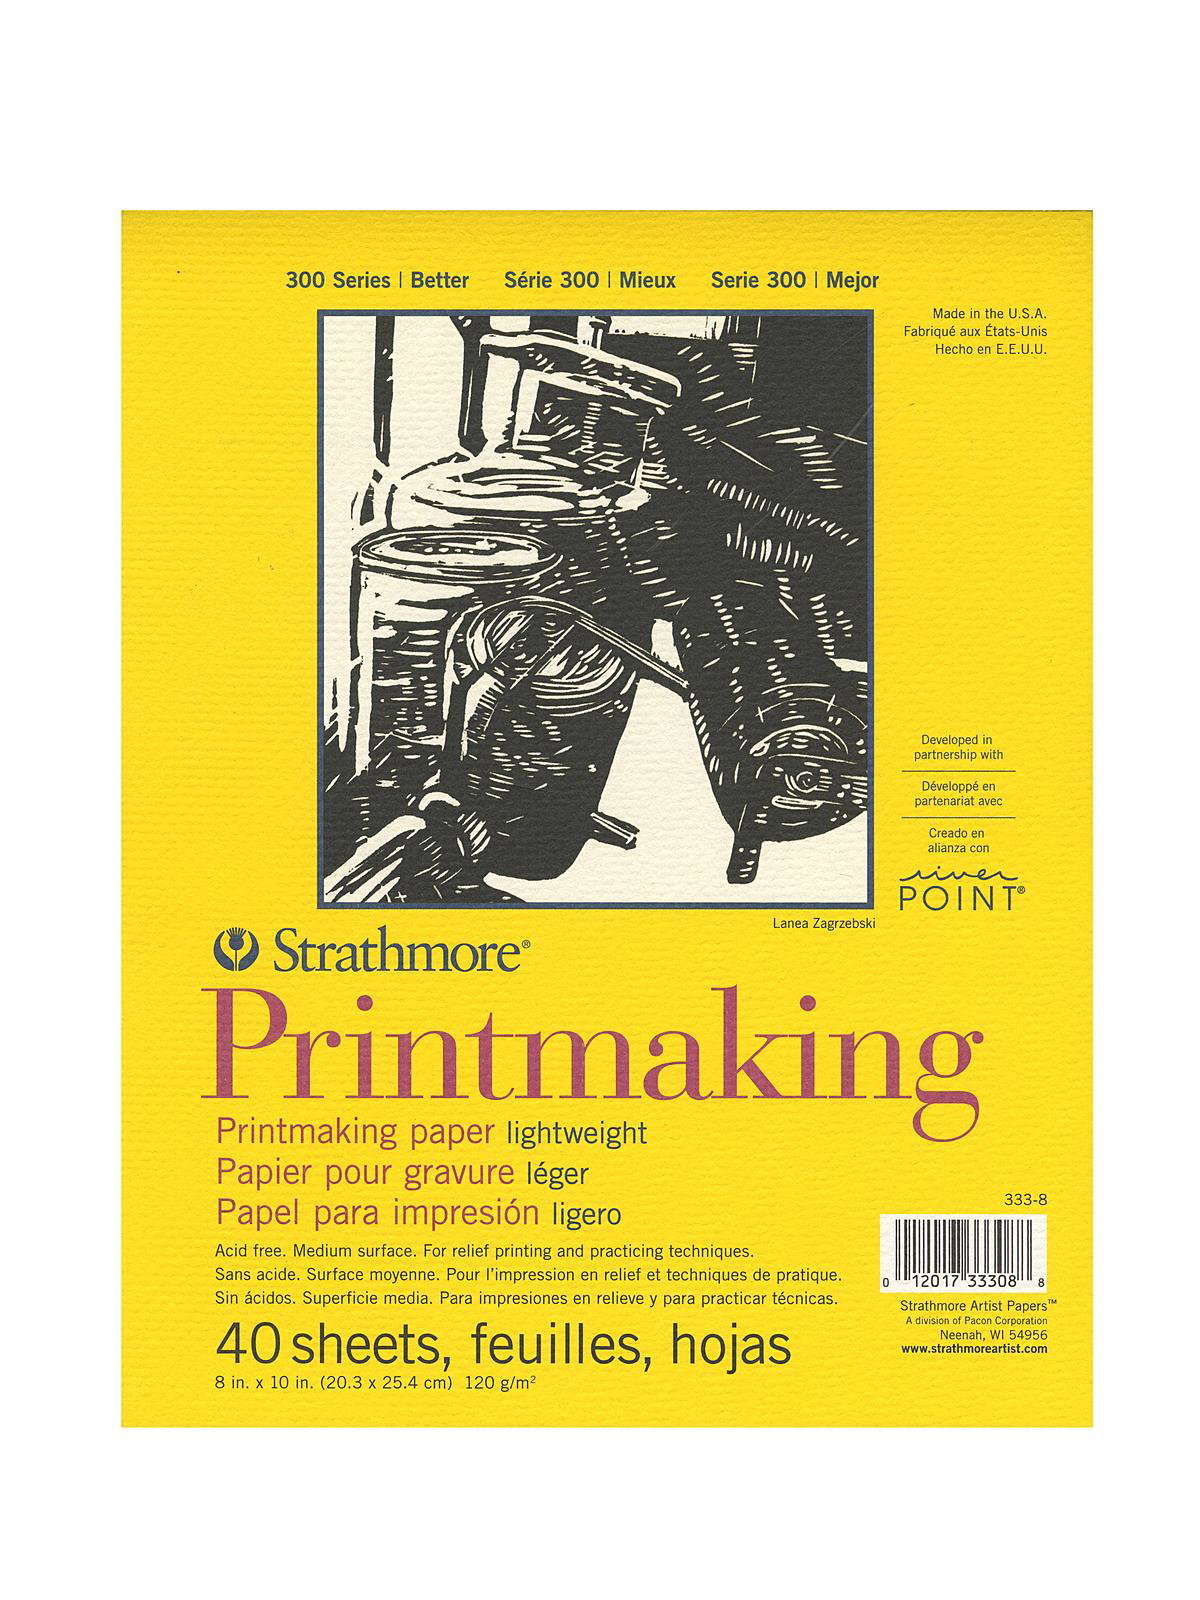 Strathmore 300 Lightweight Printmaking Paper Pad - 40 Sheets, 8